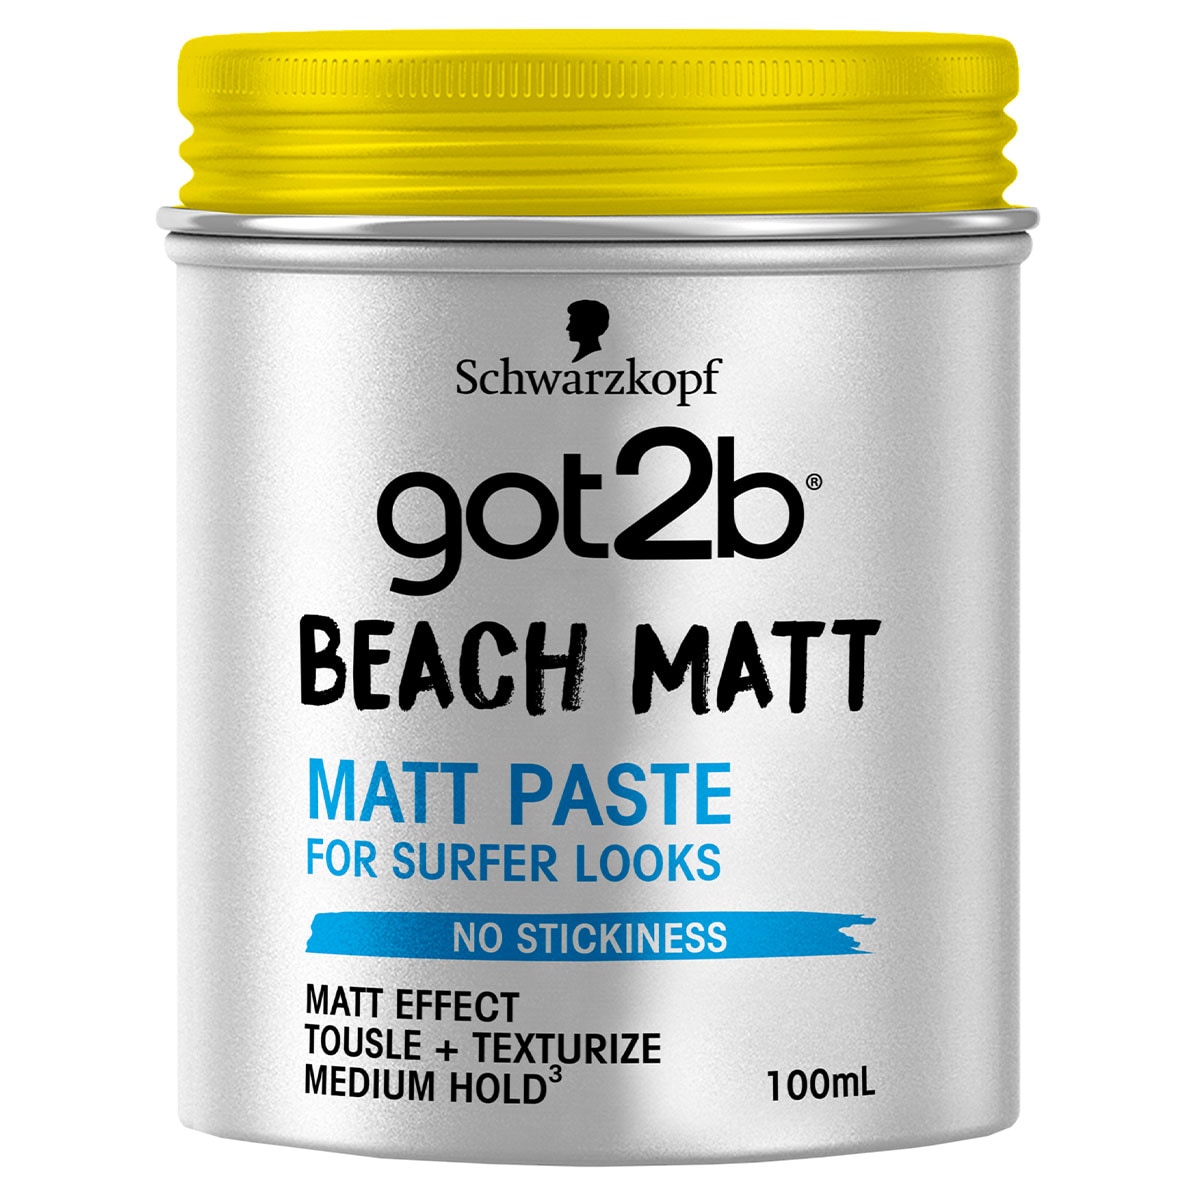 Got2b BeachMatt Matt Paste 100ml by Schwarzkopf